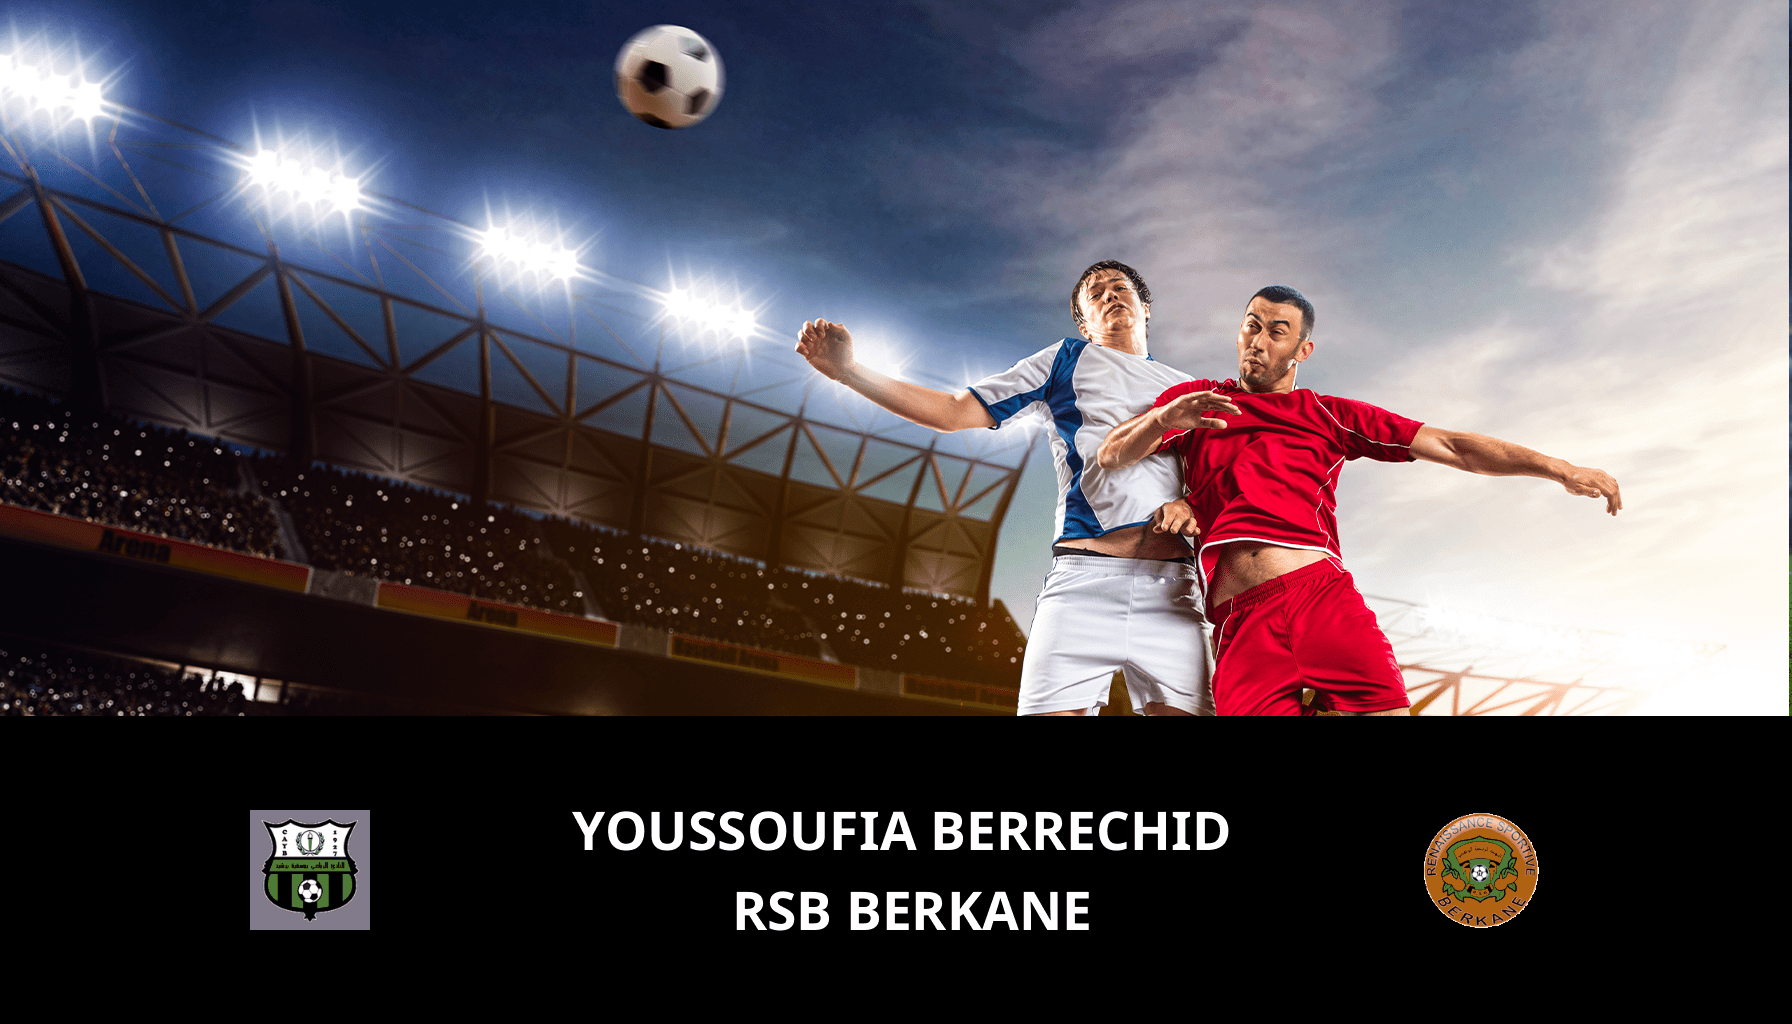 Previsione per Youssoufia Berrechid VS Renaissance Berkane il 13/03/2024 Analysis of the match